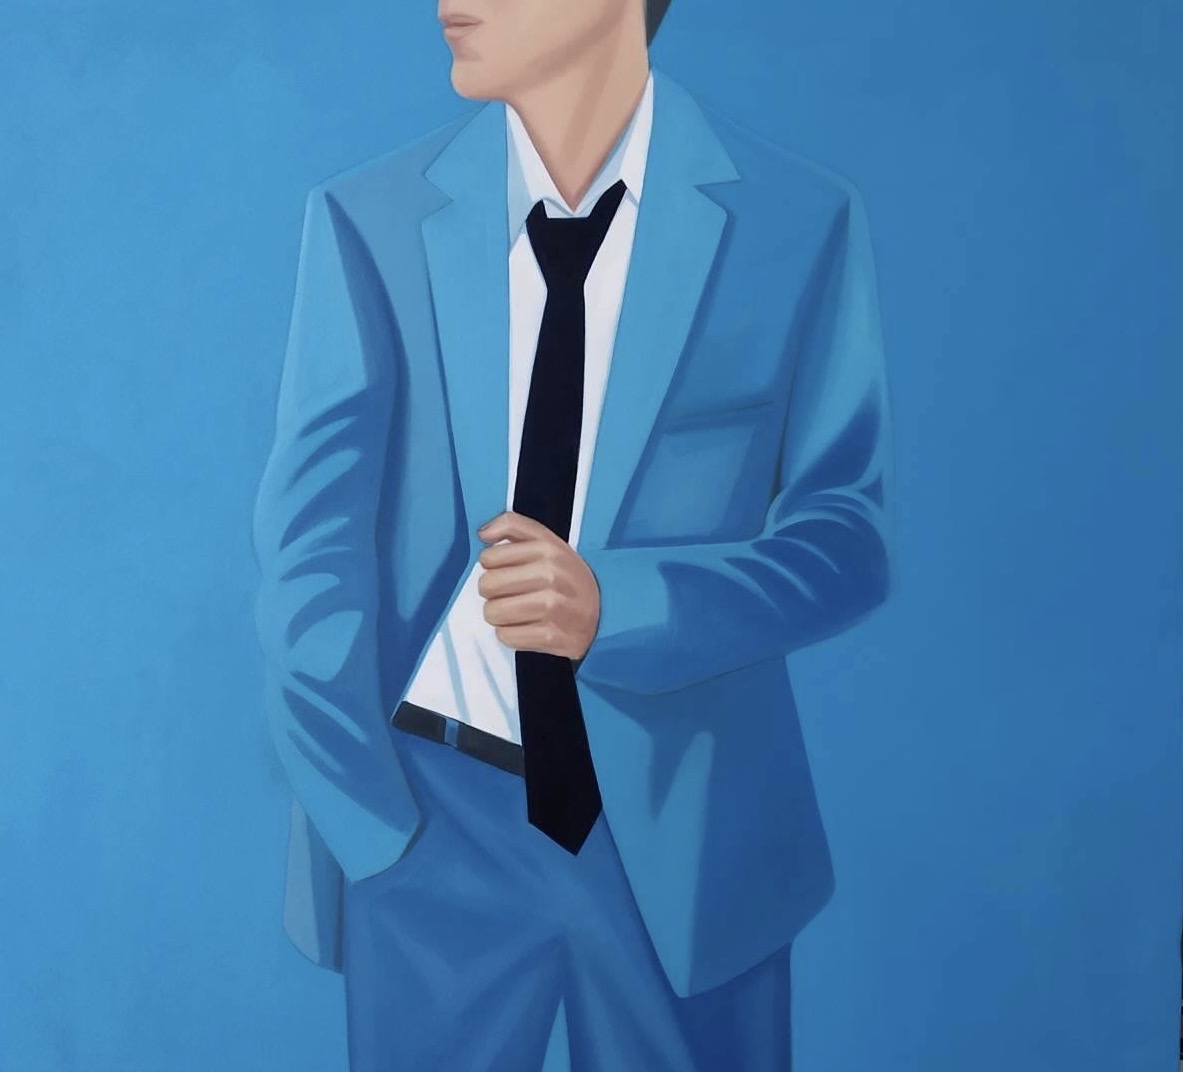 Mr. Blue, Oil on canvas, 130 x 120 cm, 2019